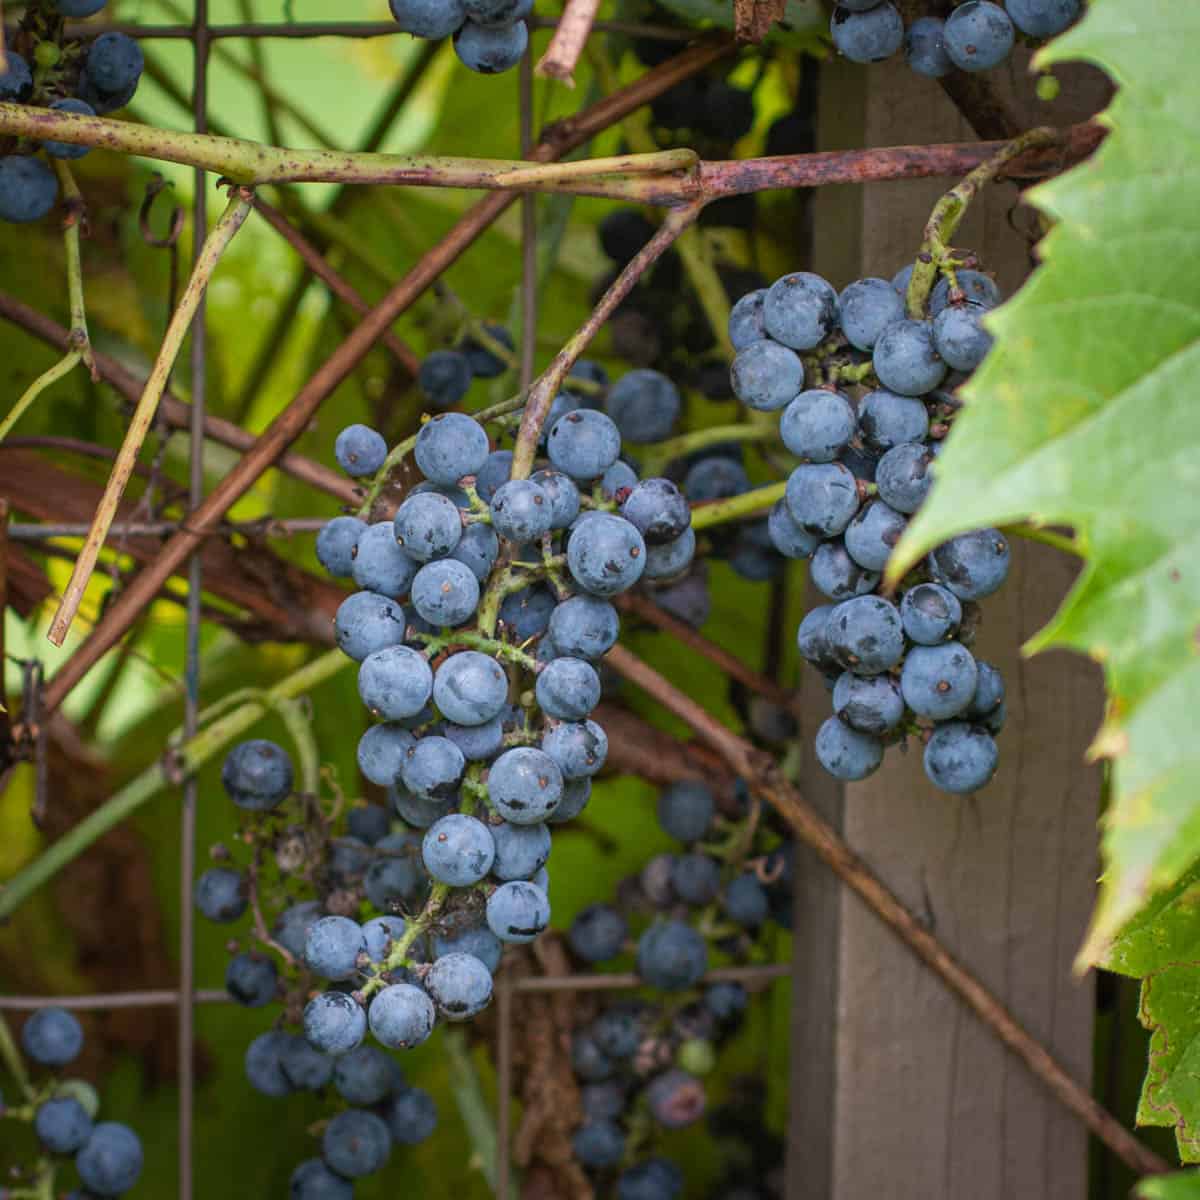 Wild grapes from Minnesota, Vitis riparia